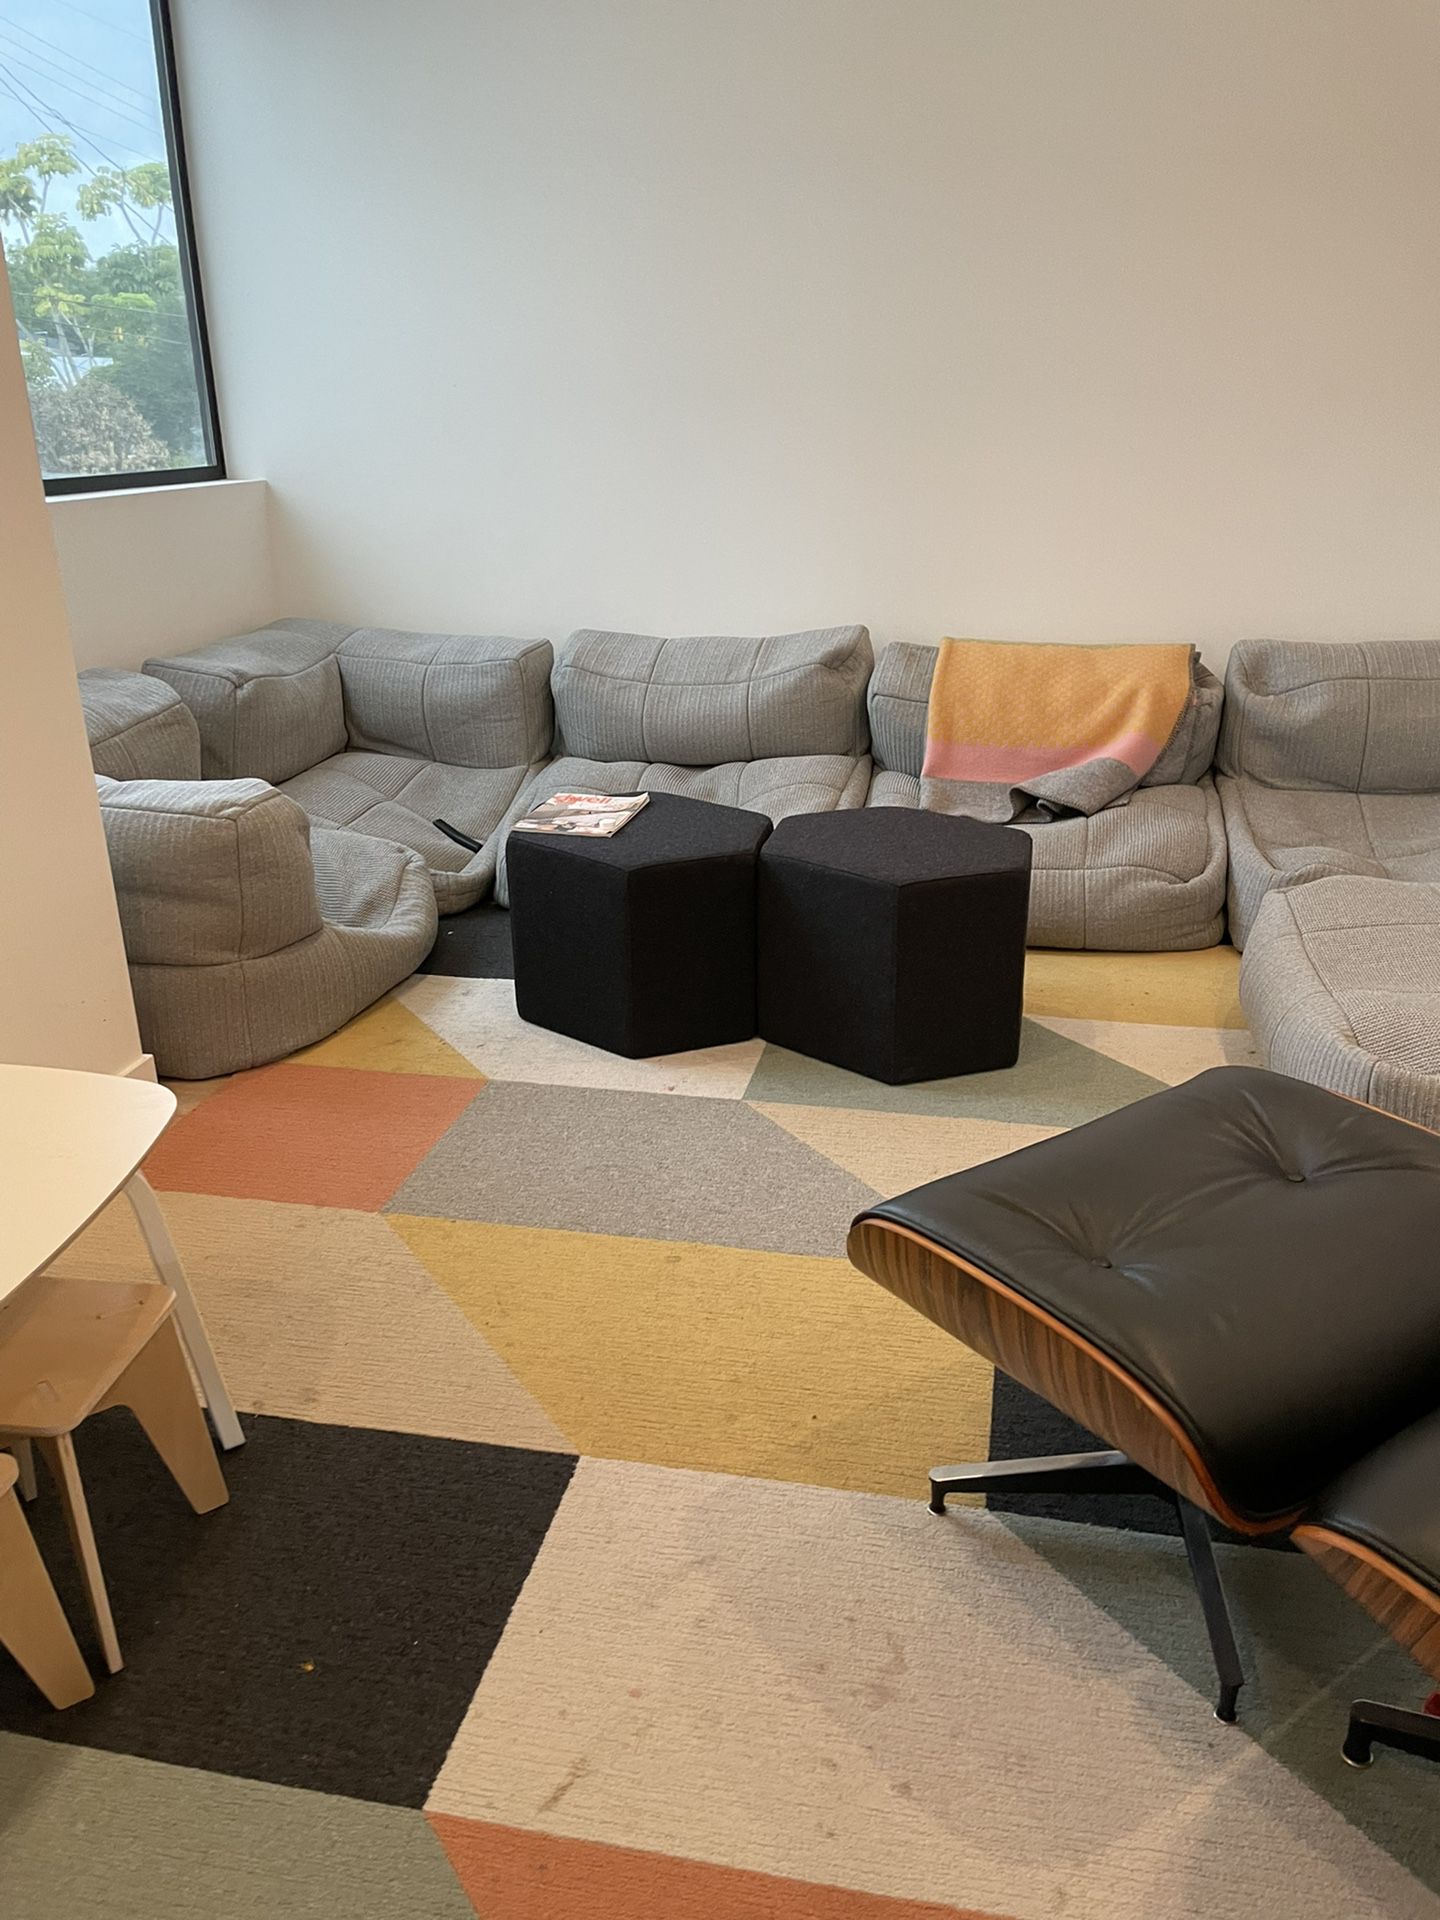 Article Corvos Modular Sectional Sofa Indoor / Outdoor